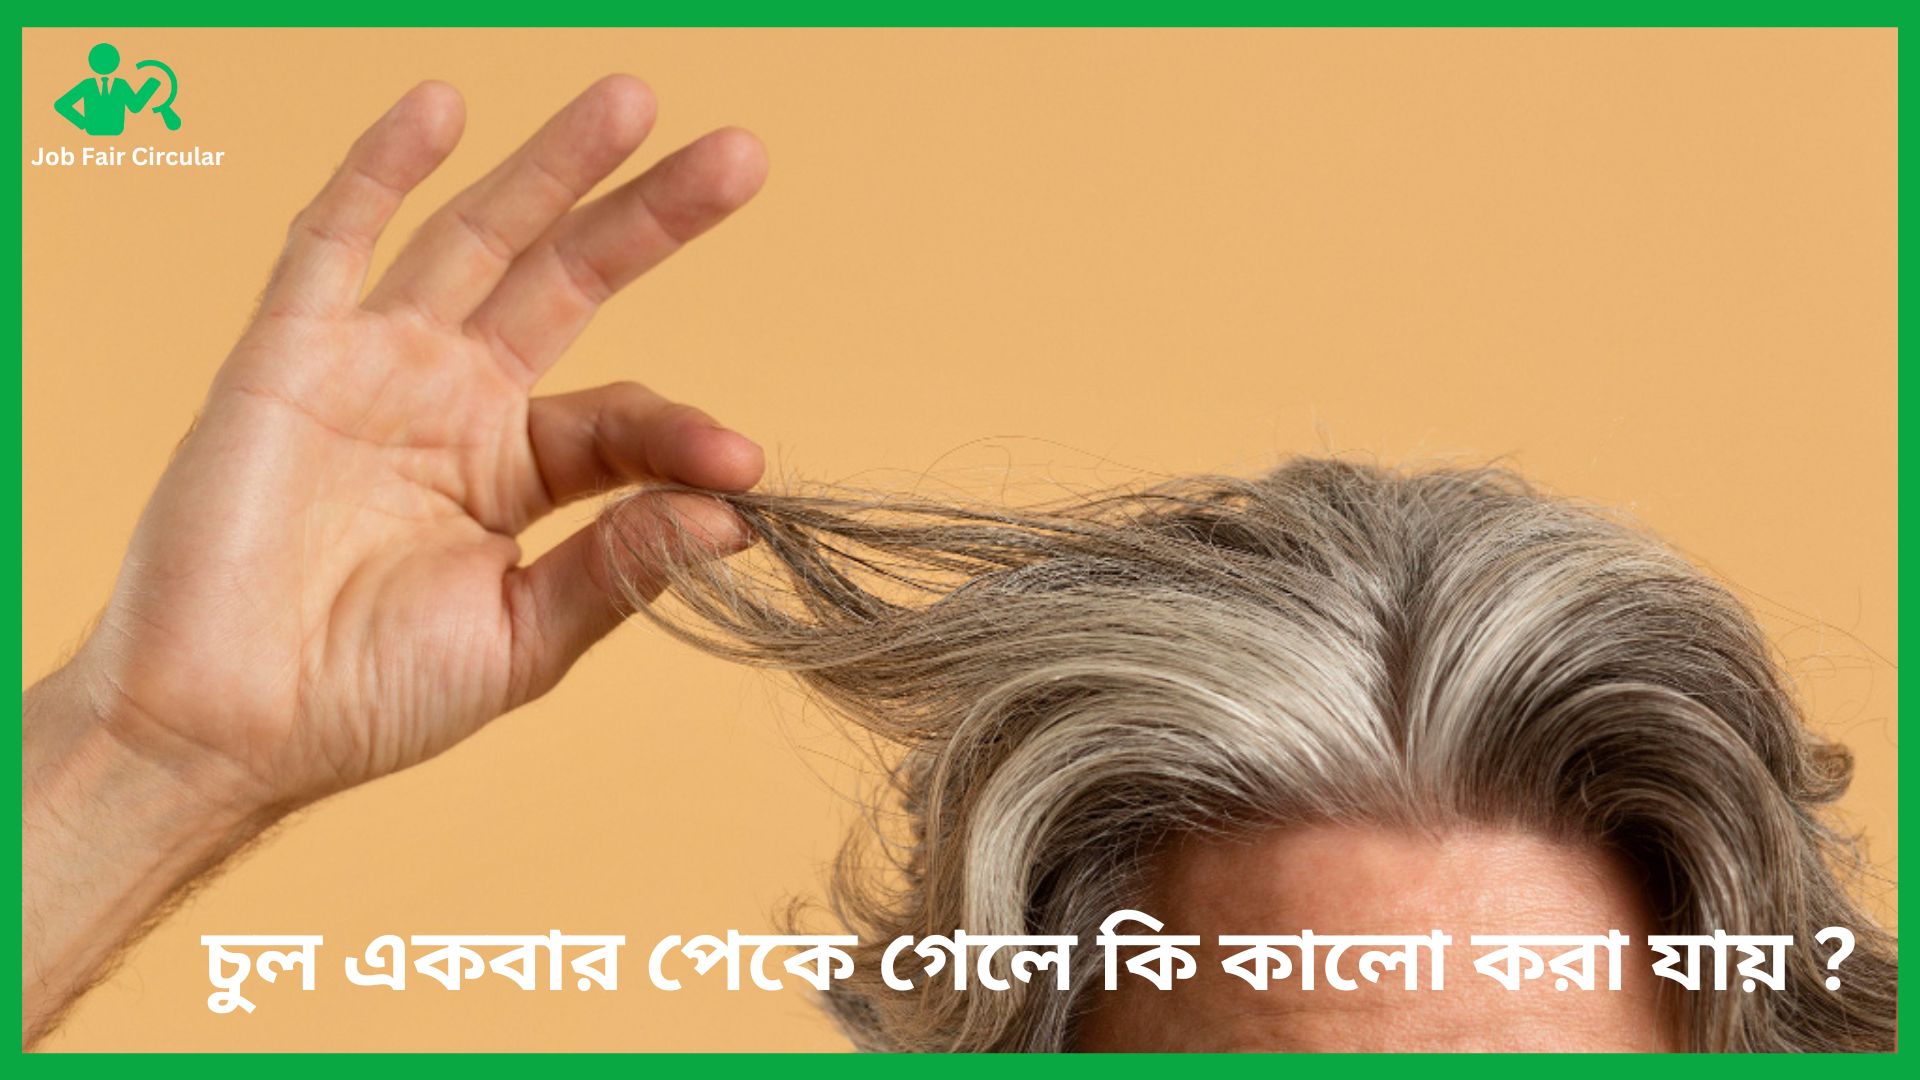 Grey hair Myth: চুল একবার পাকলে স্বাভাবিক কালো রং কি ফেরানো যায় ?